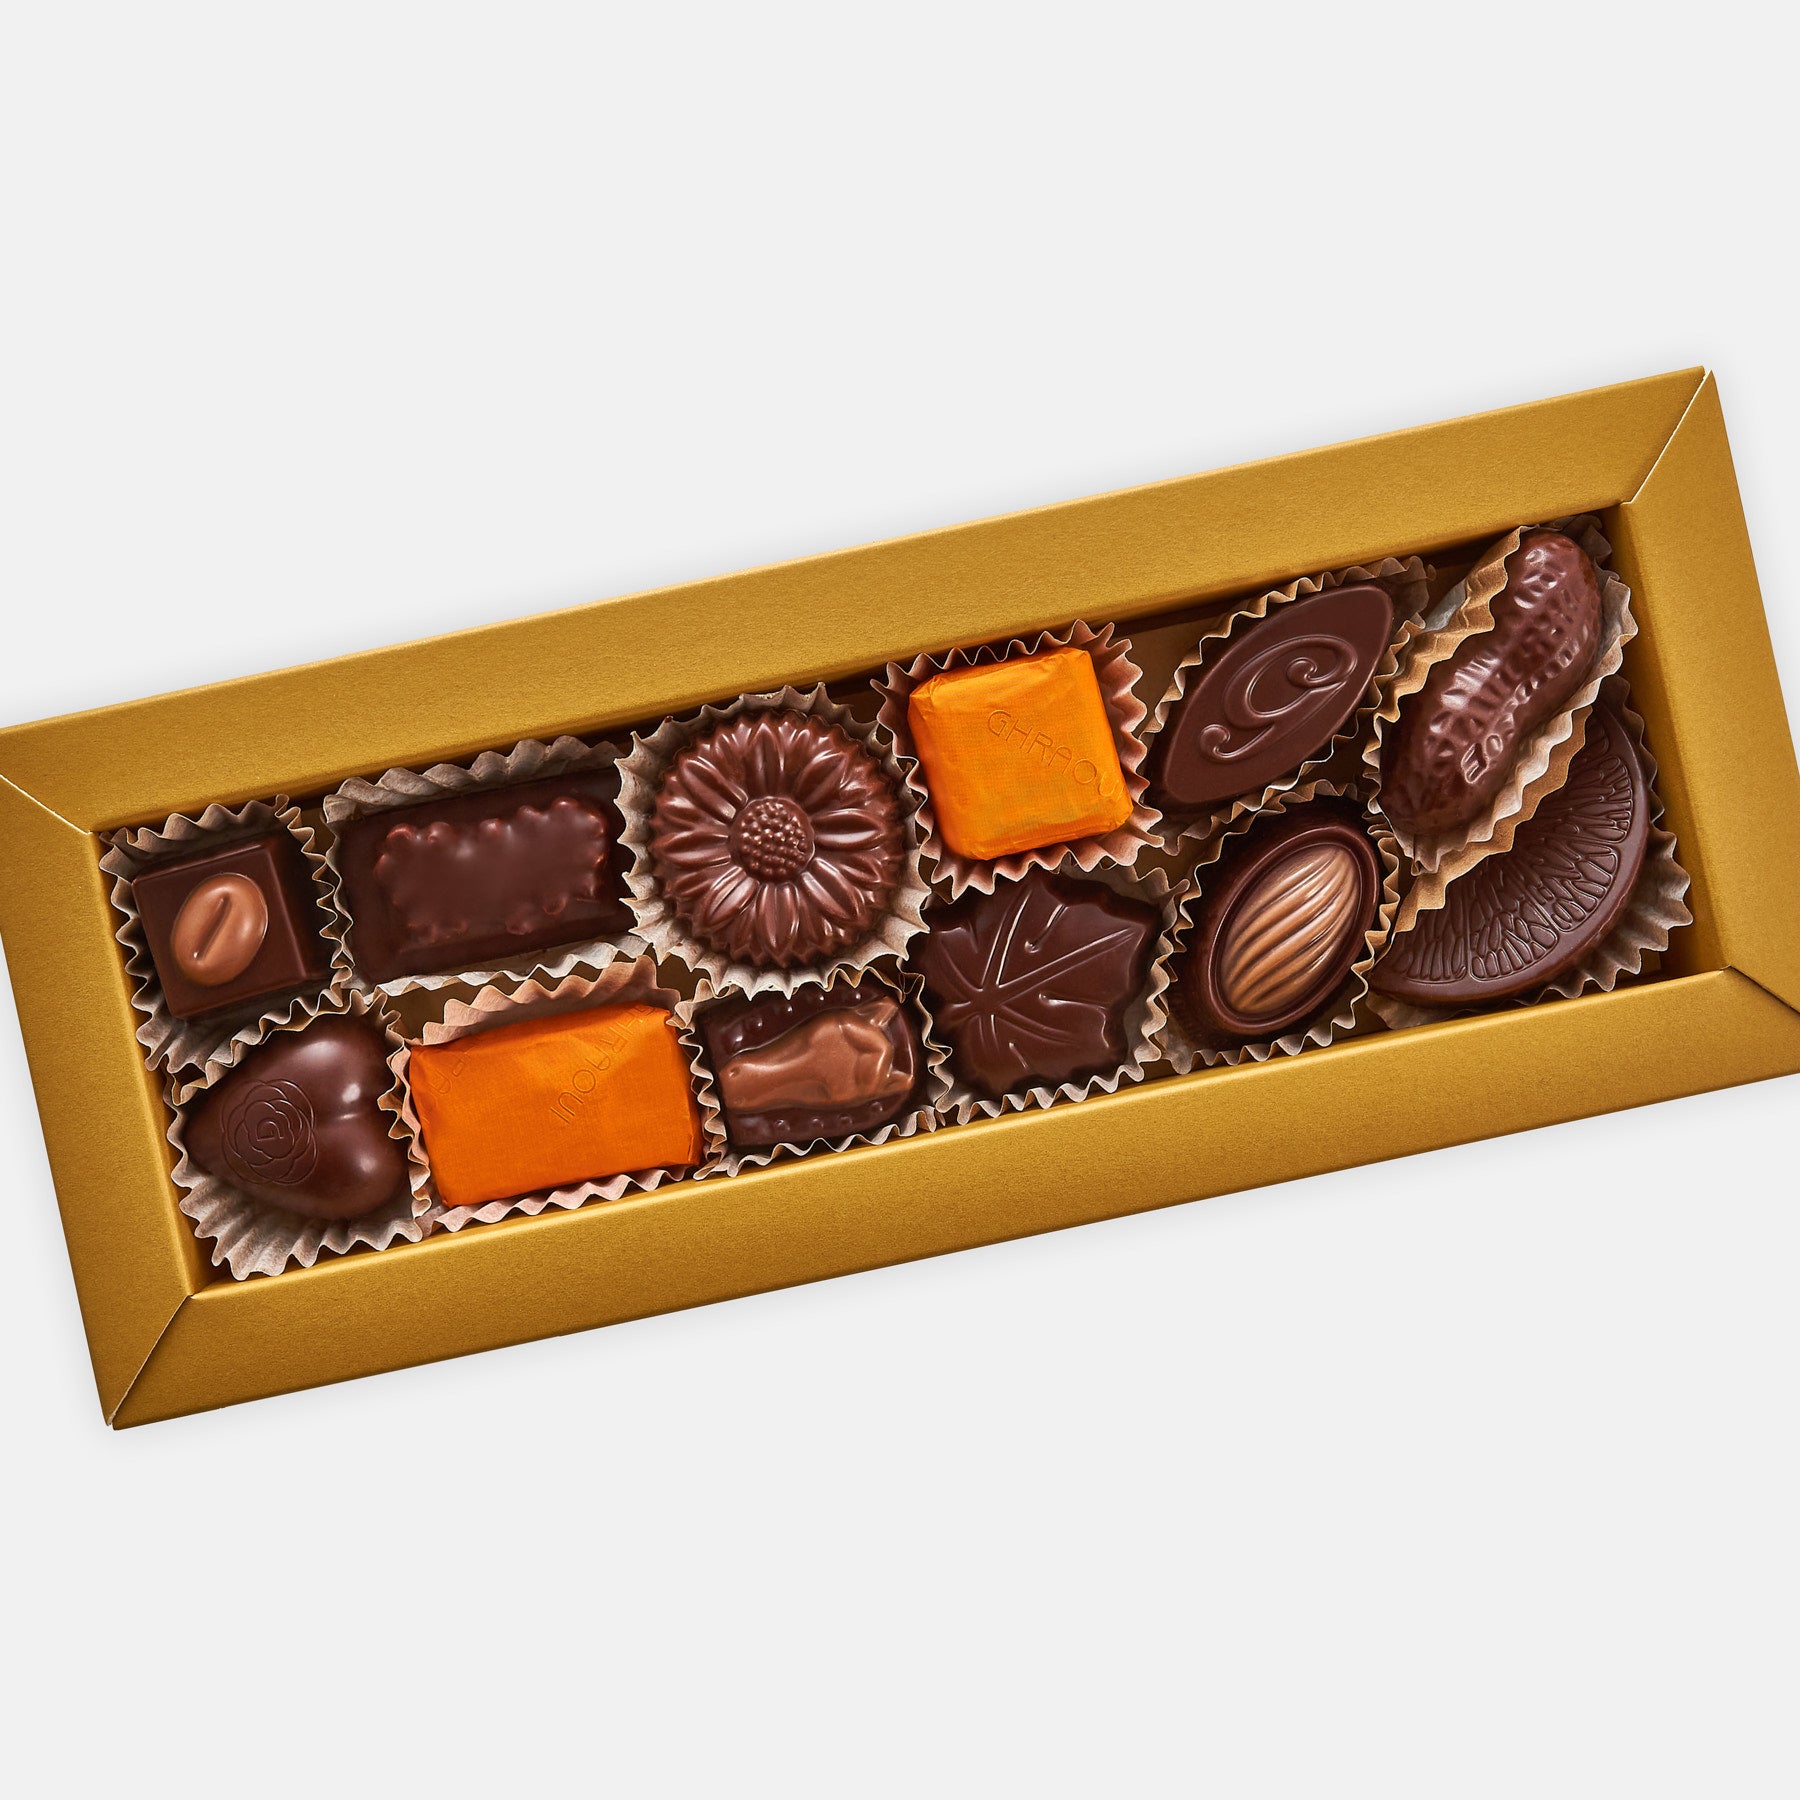 Assorted dark chocolate selection